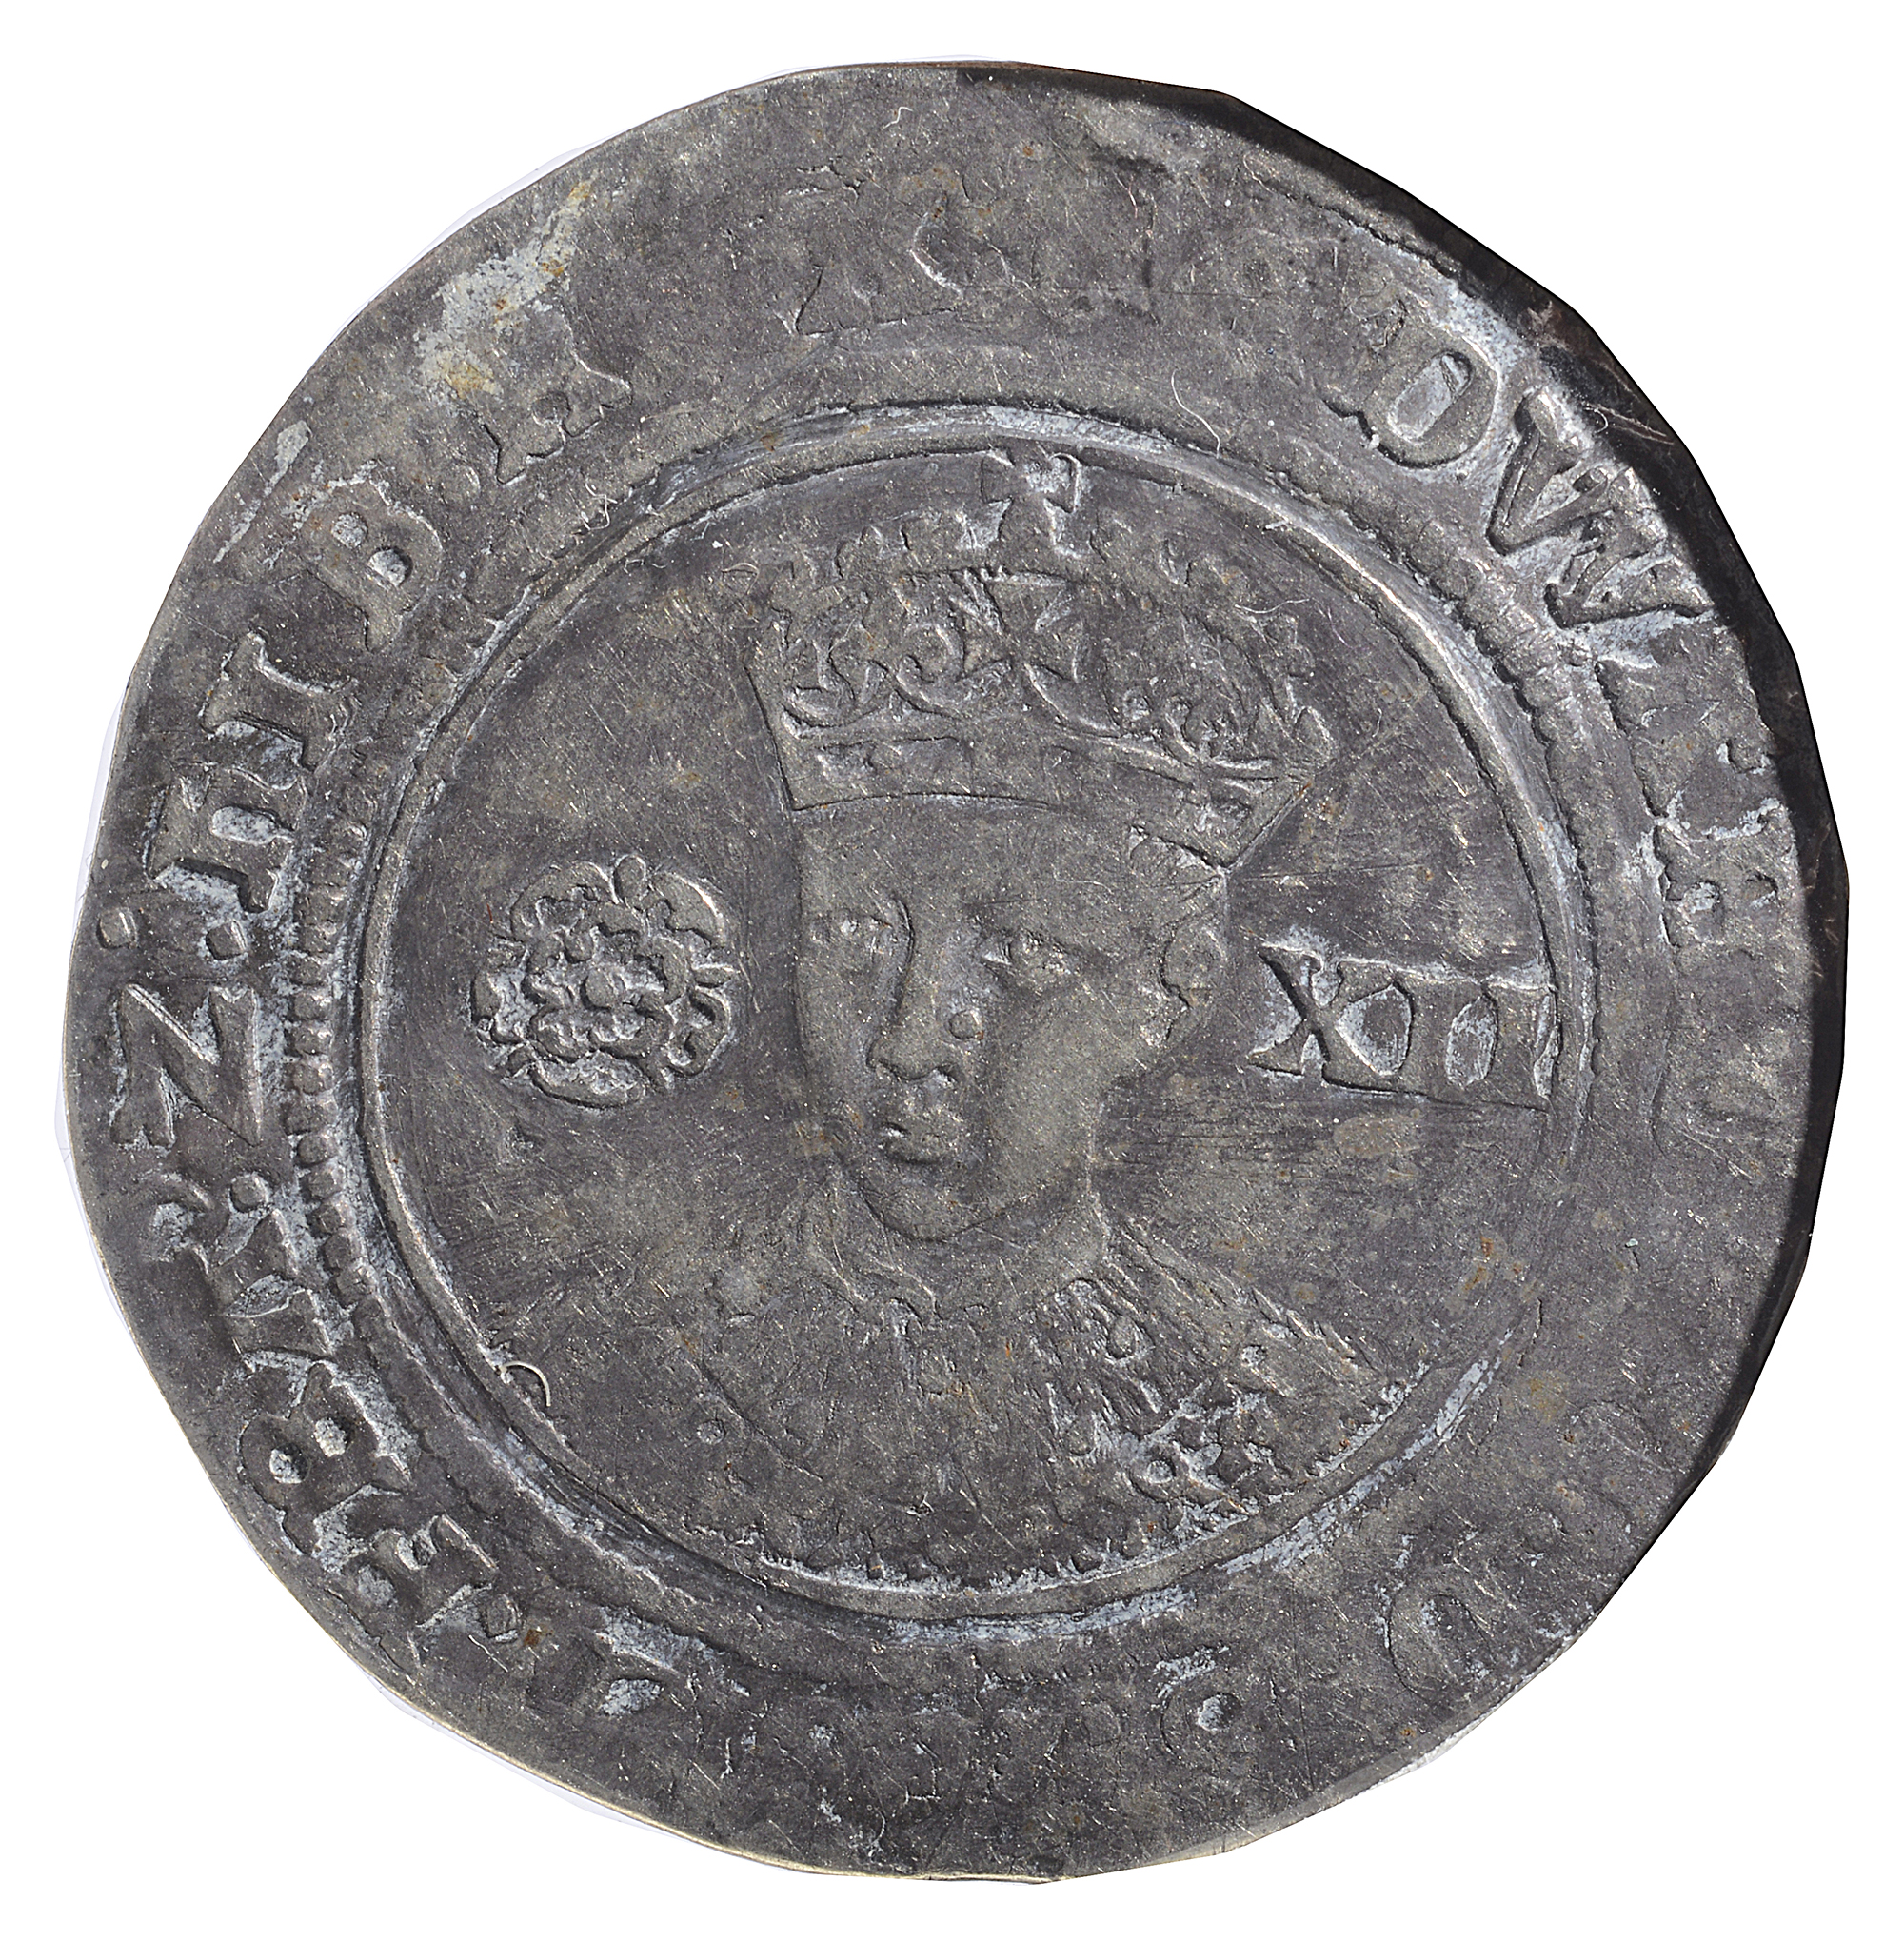 Edward VI (1547-1553) silver shilling Fine silver issue 3rd period, London Mint, mint mark TunEDWARD